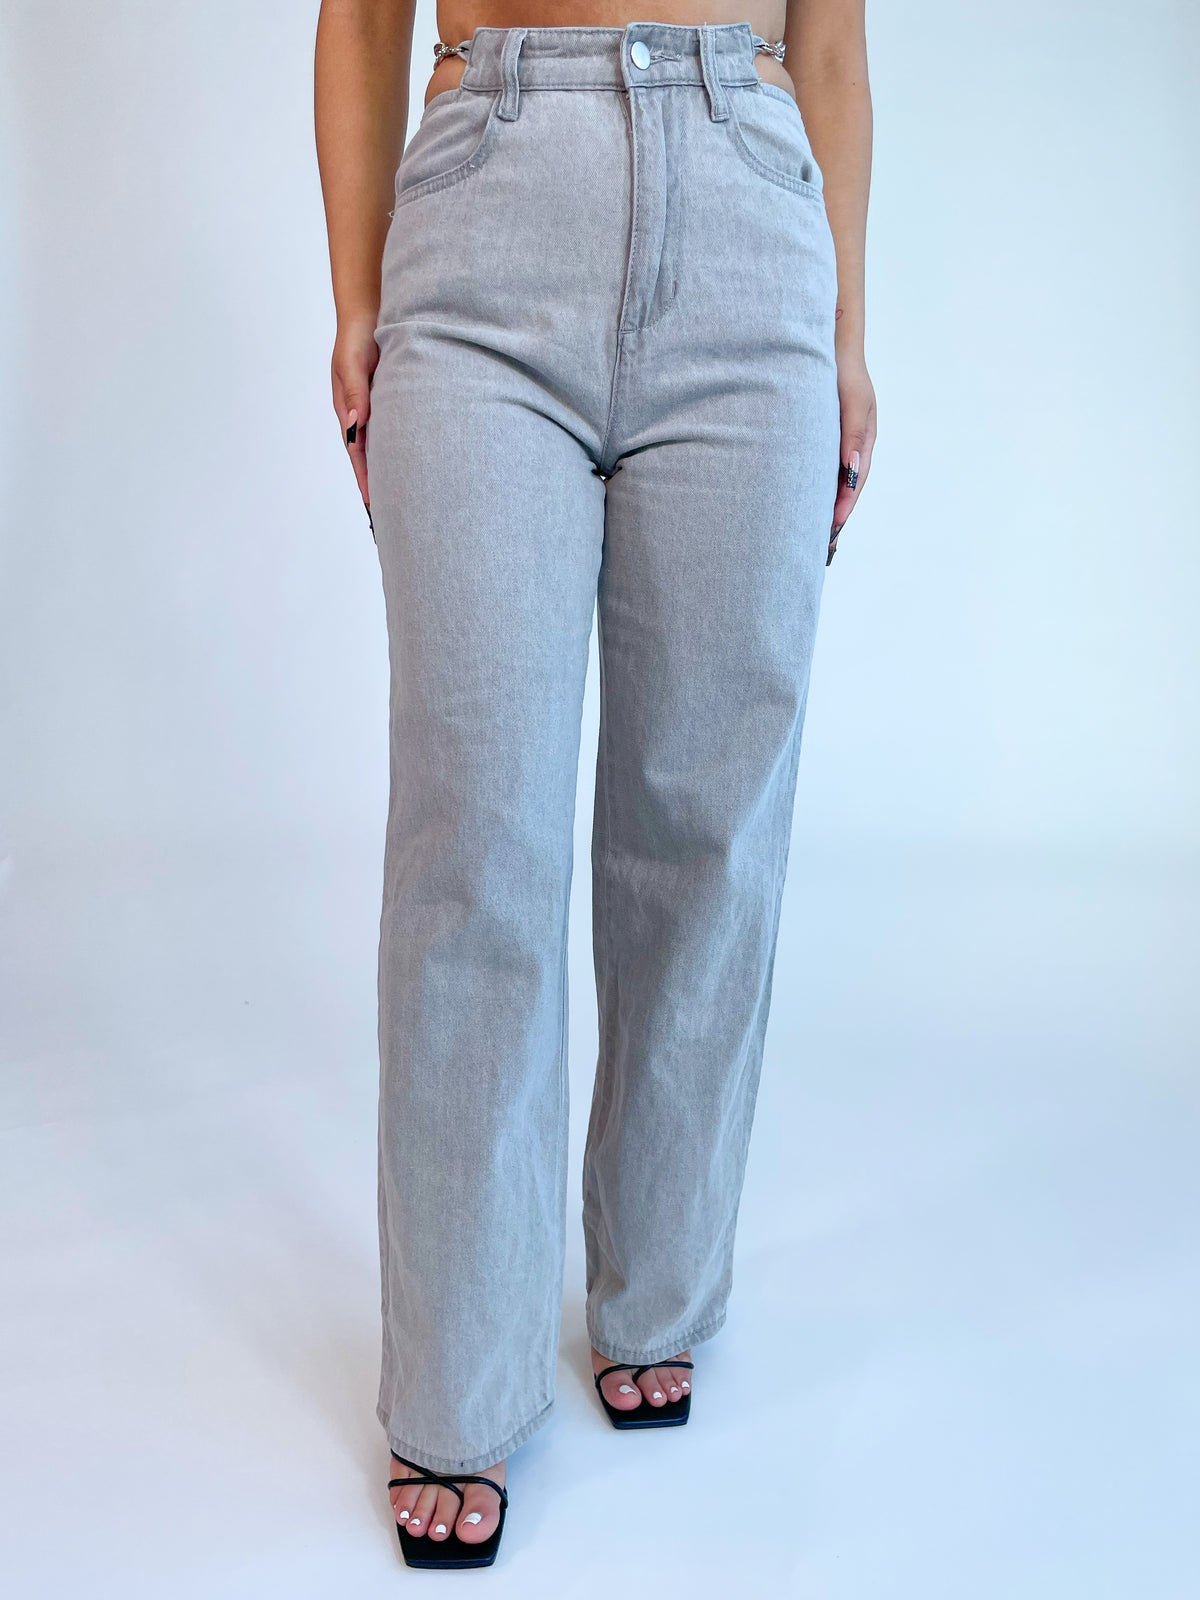 grey straight leg jeans, high waisted, hip cutouts, chain waist detail (on both sides)